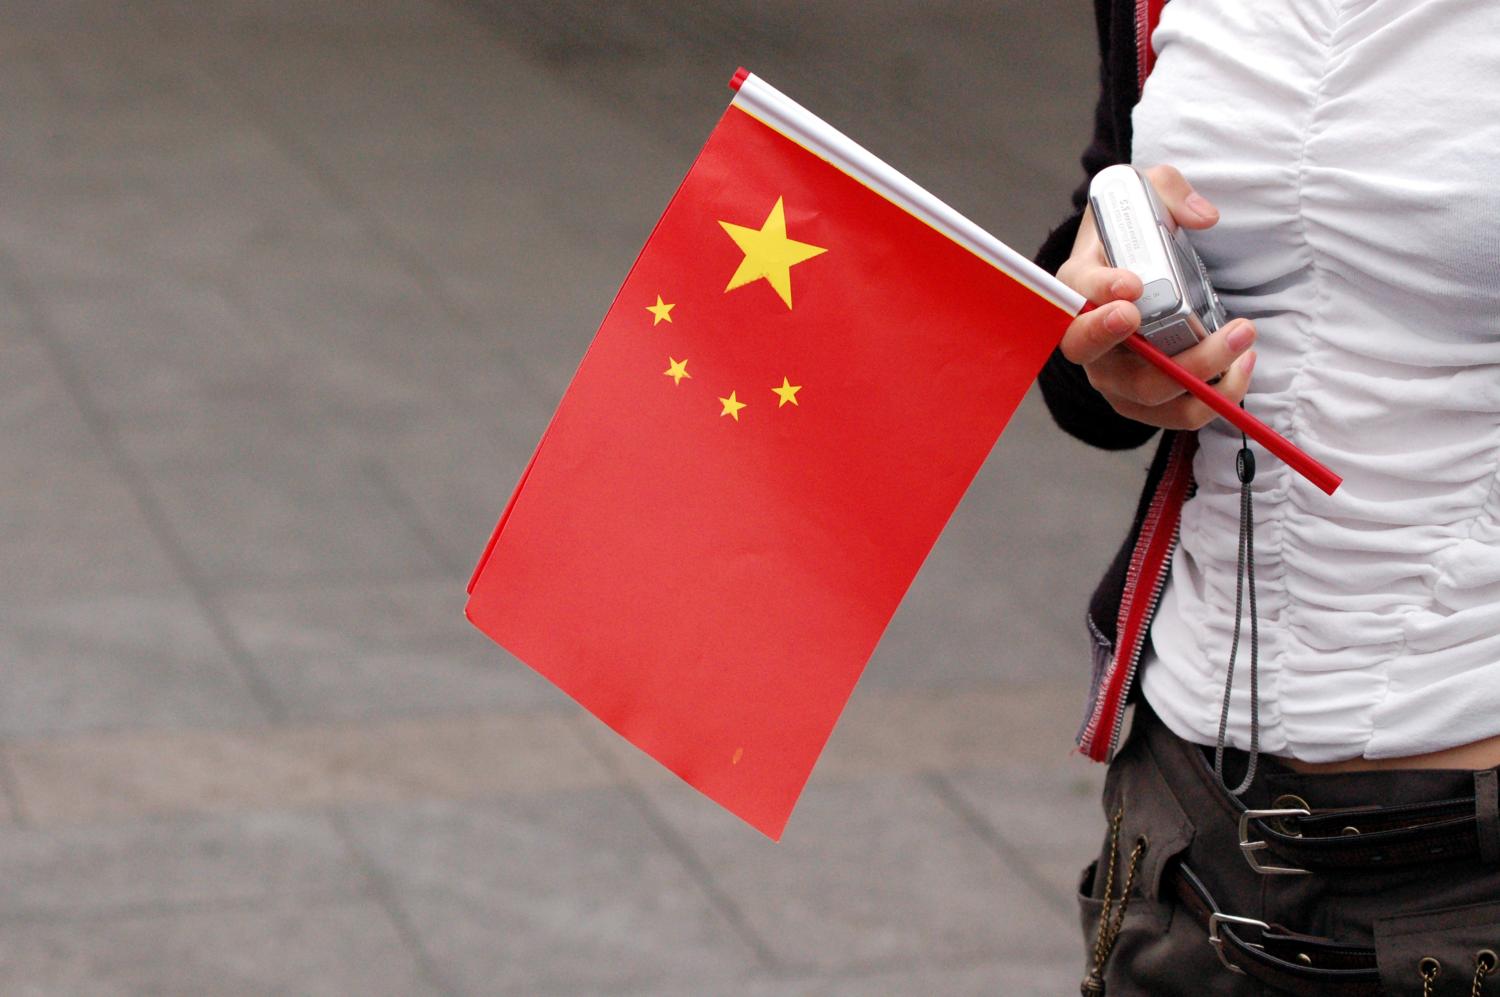 China ramps up information warfare operations abroad